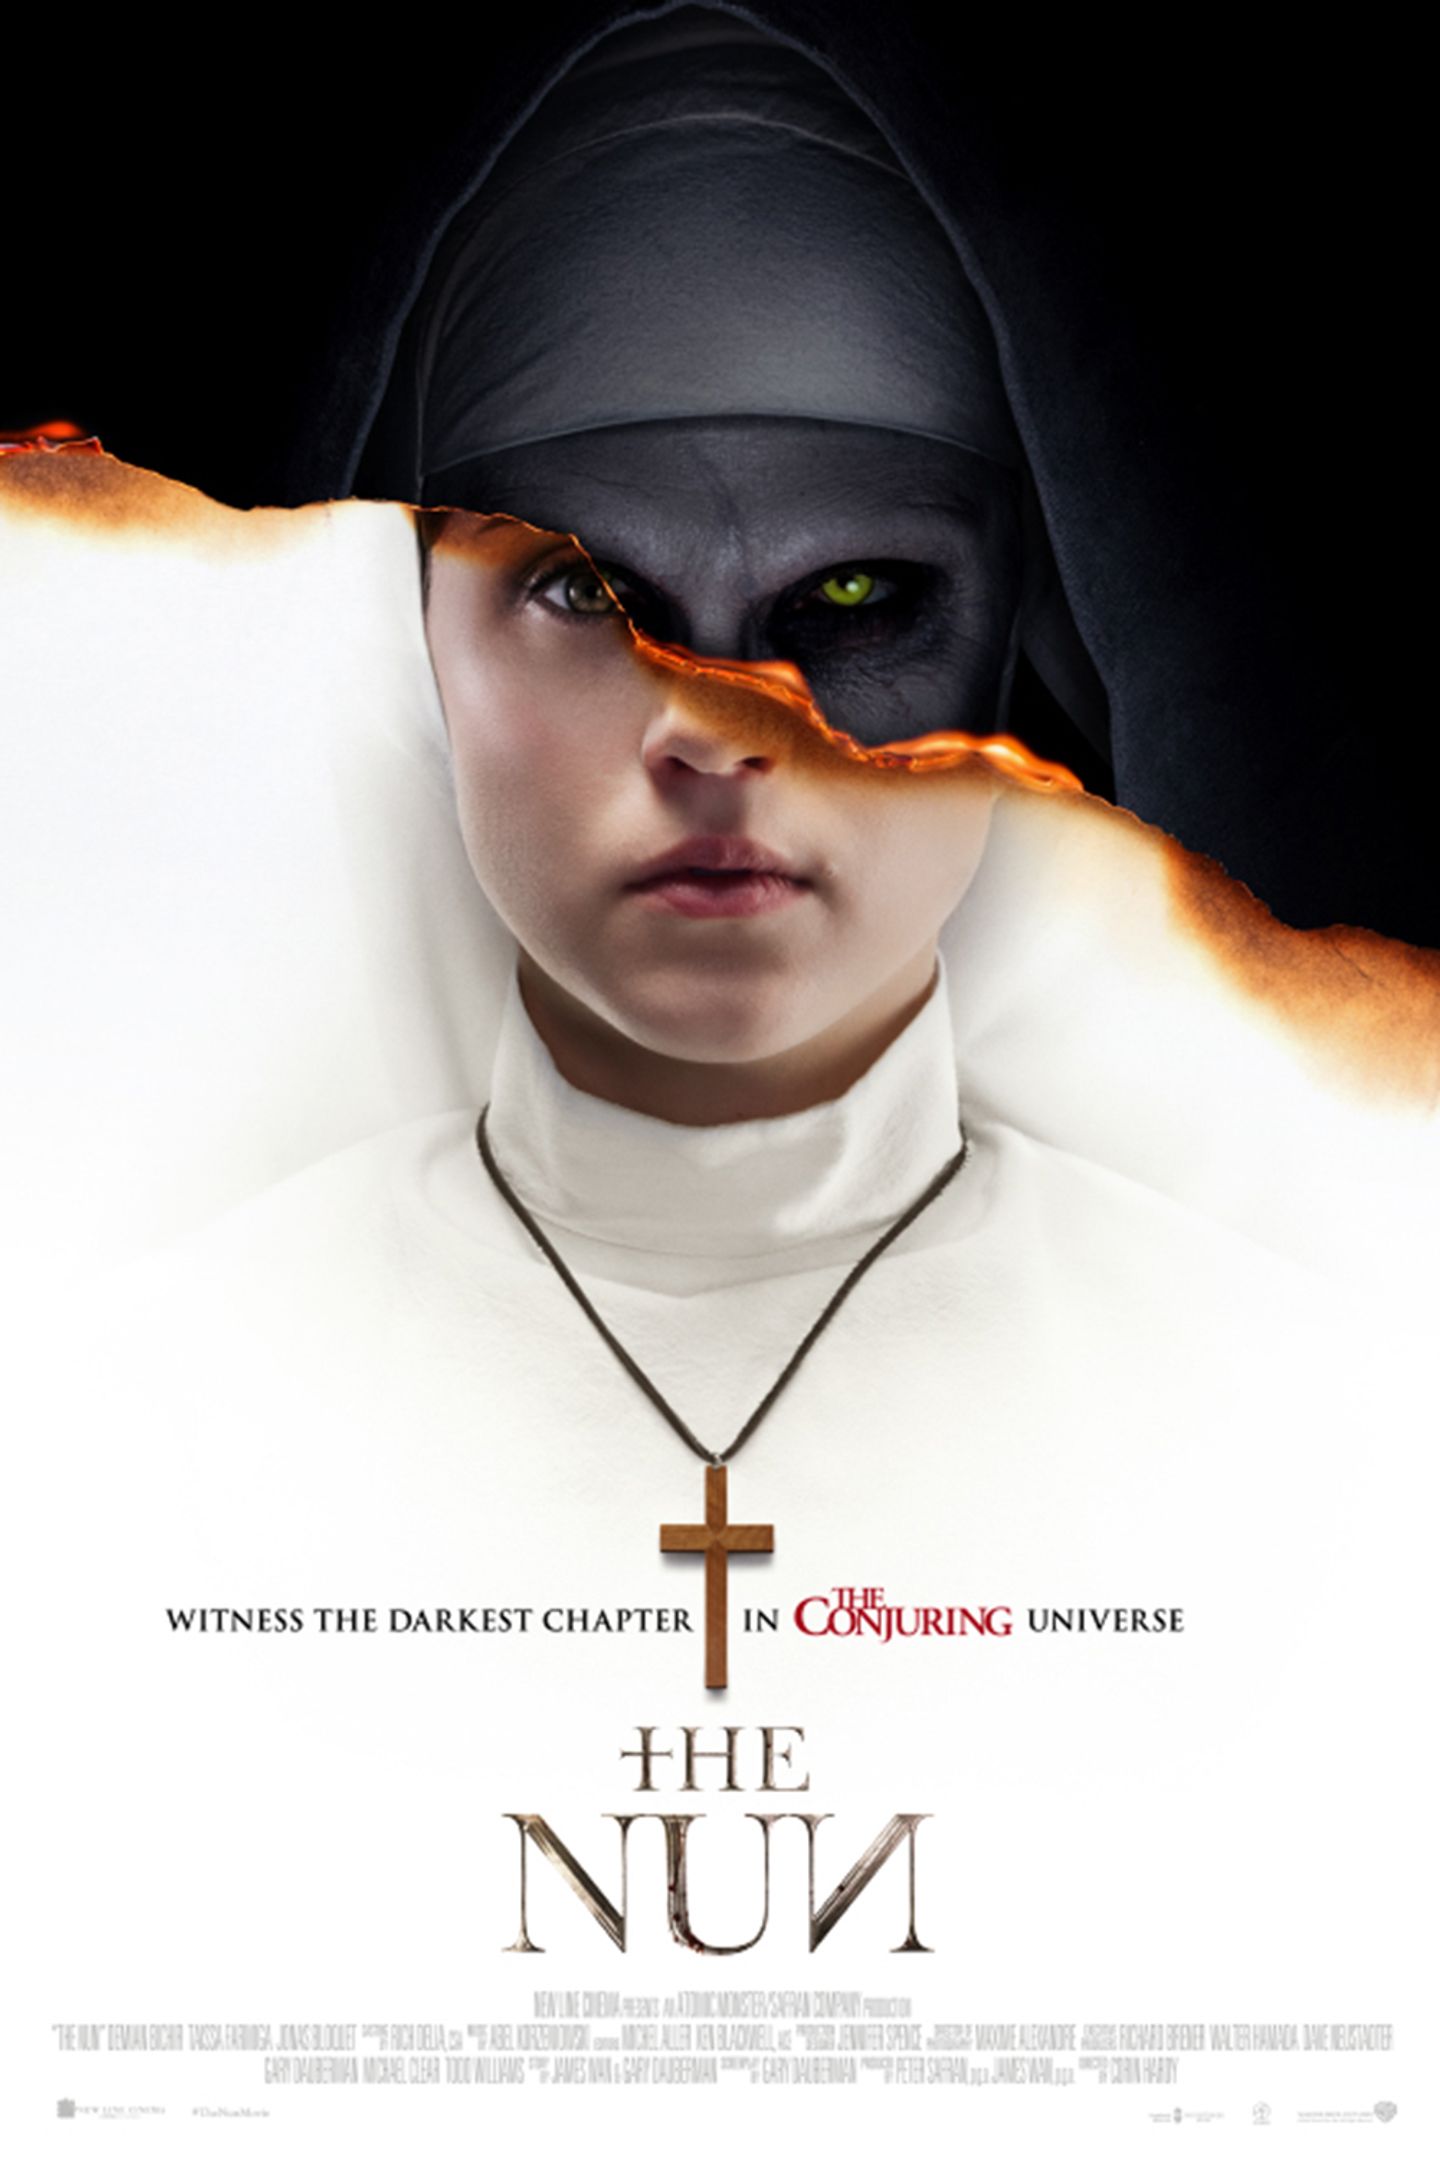 Plakat for 'The Nun'